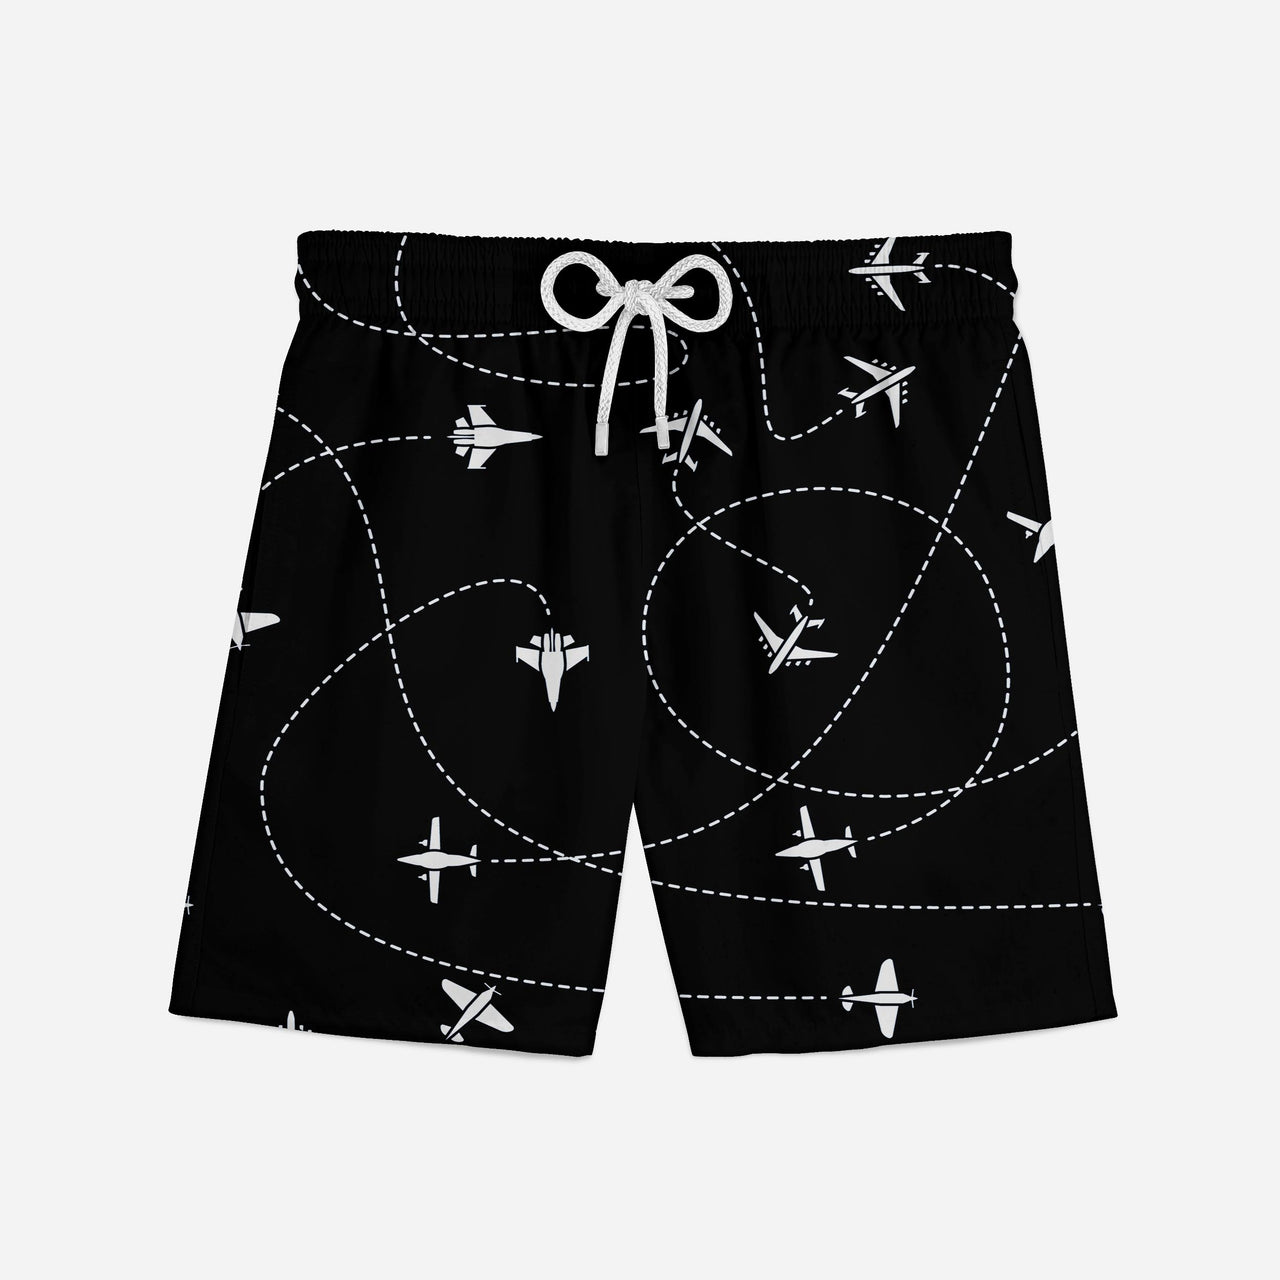 Travel The World By Plane (Black) Designed Swim Trunks & Shorts